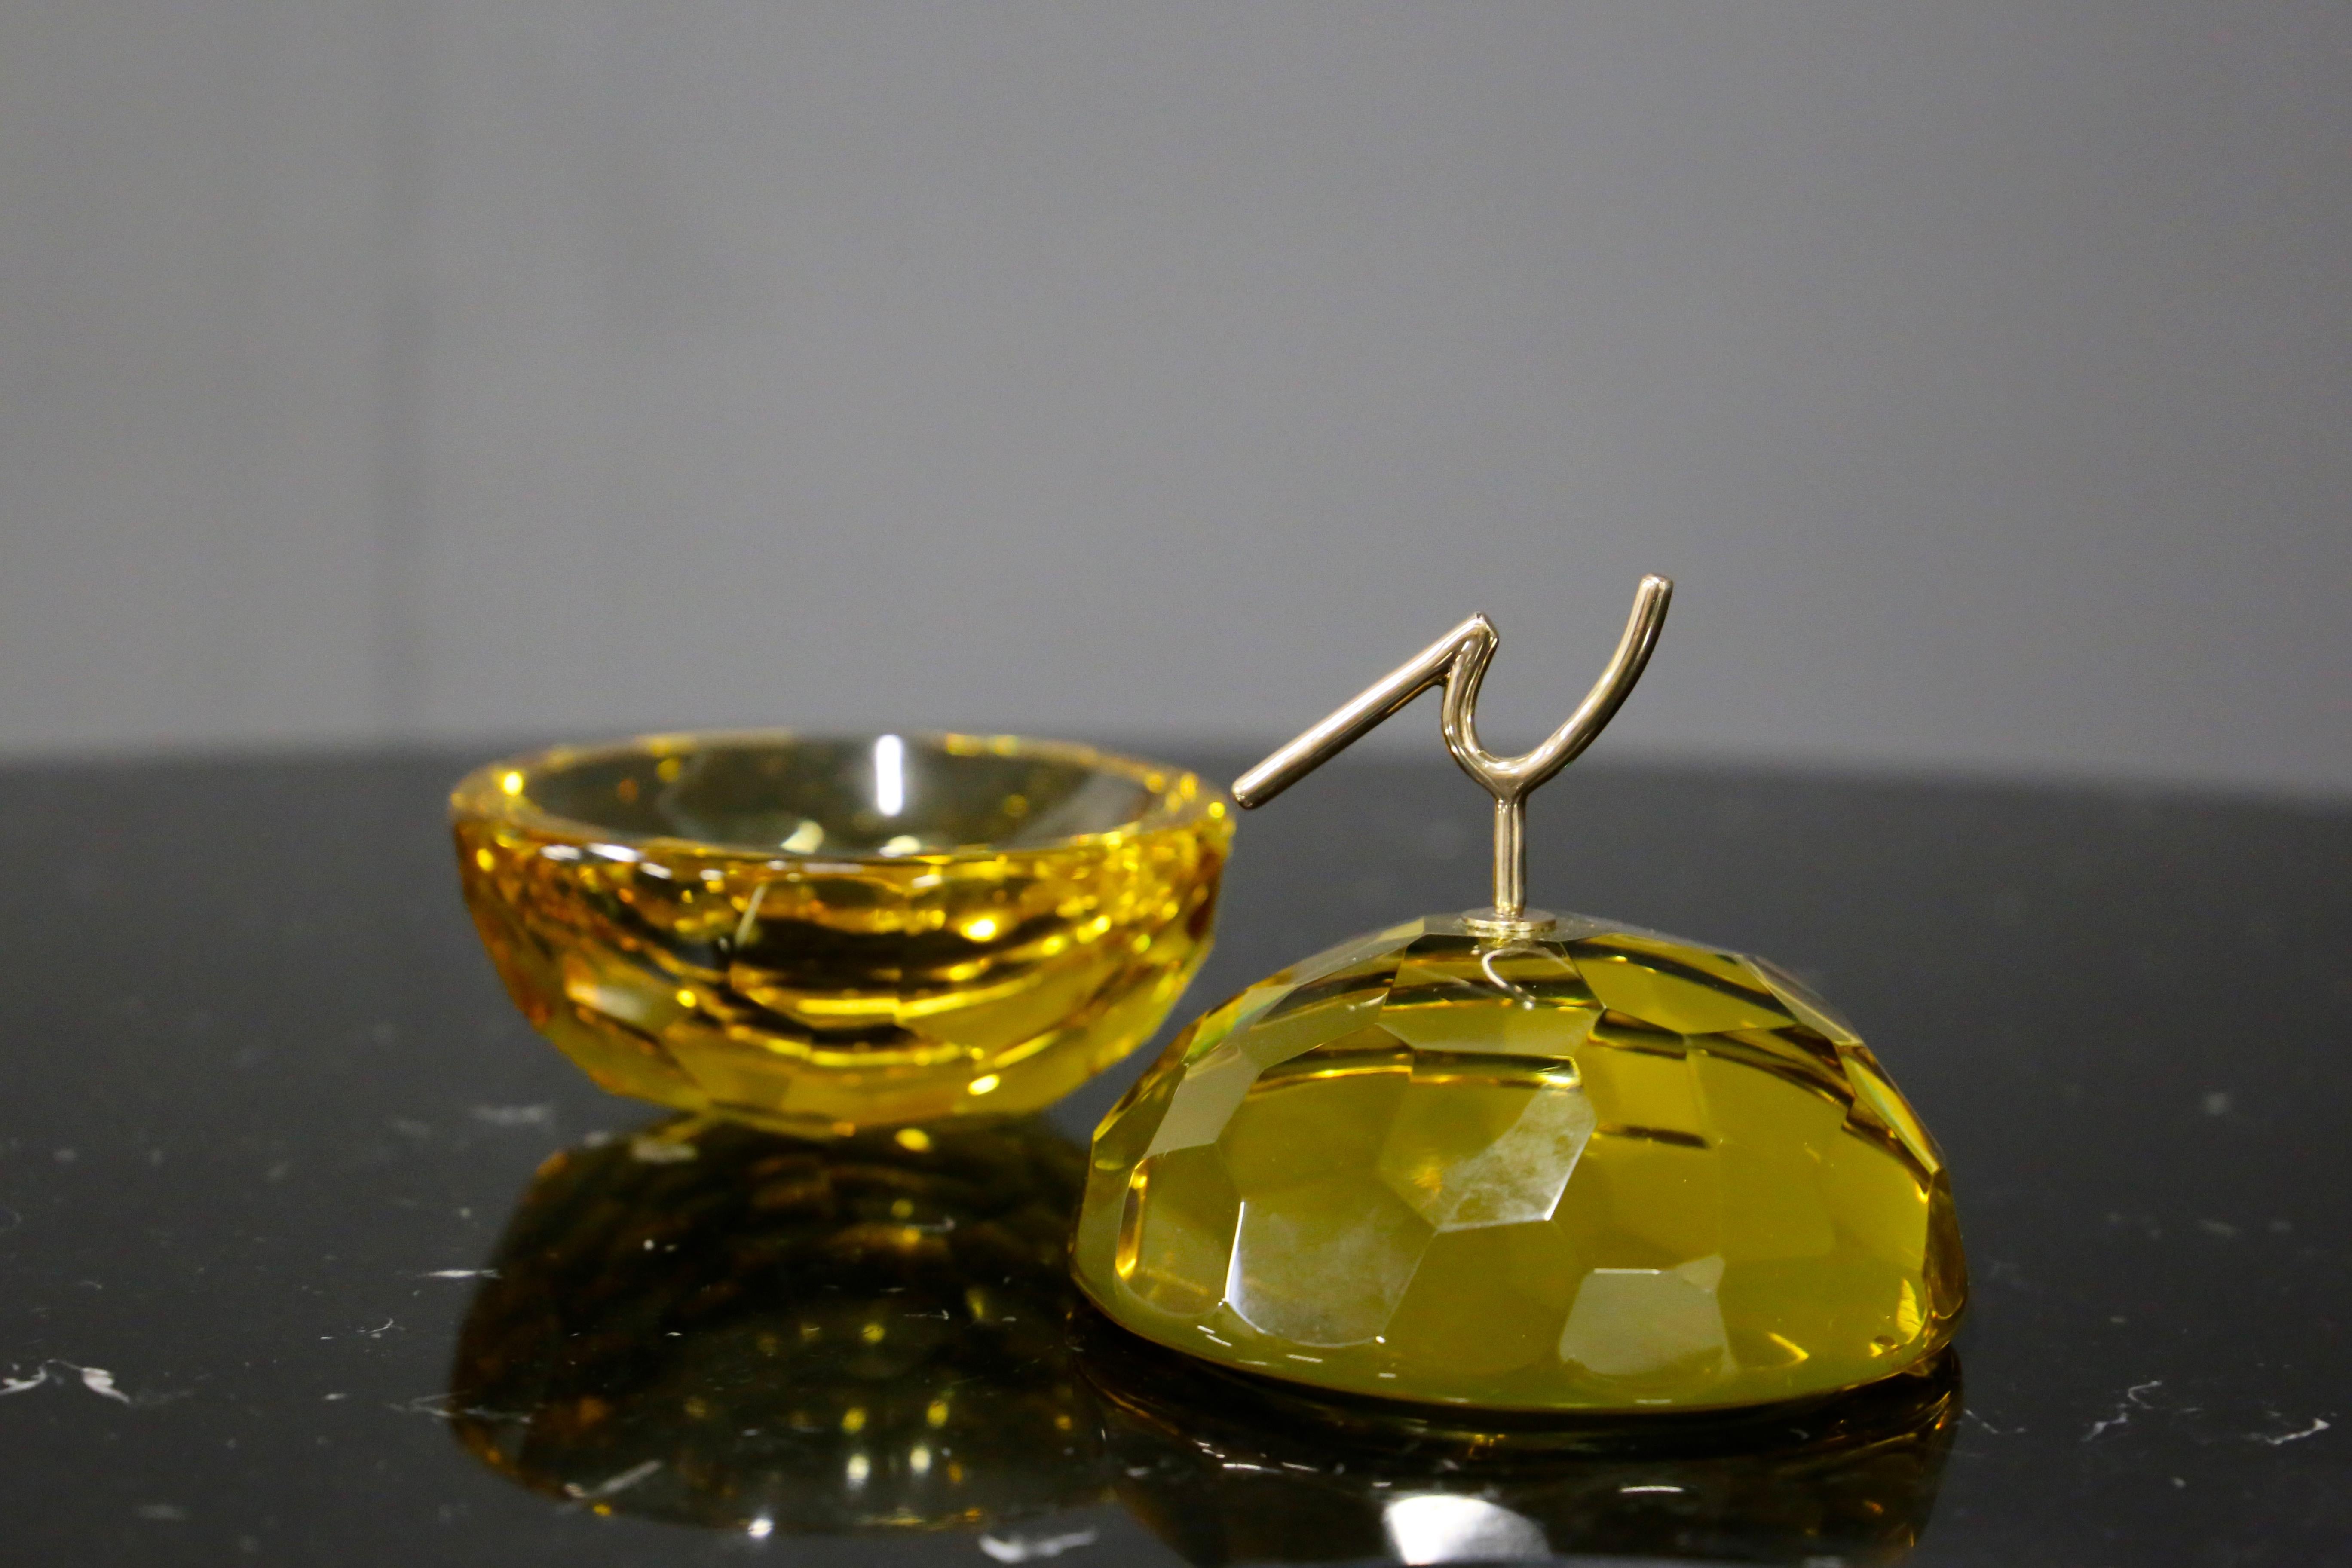 Post-Modern Ghirò Studio Jewel Box in Brass and Glass Yellow, 2019